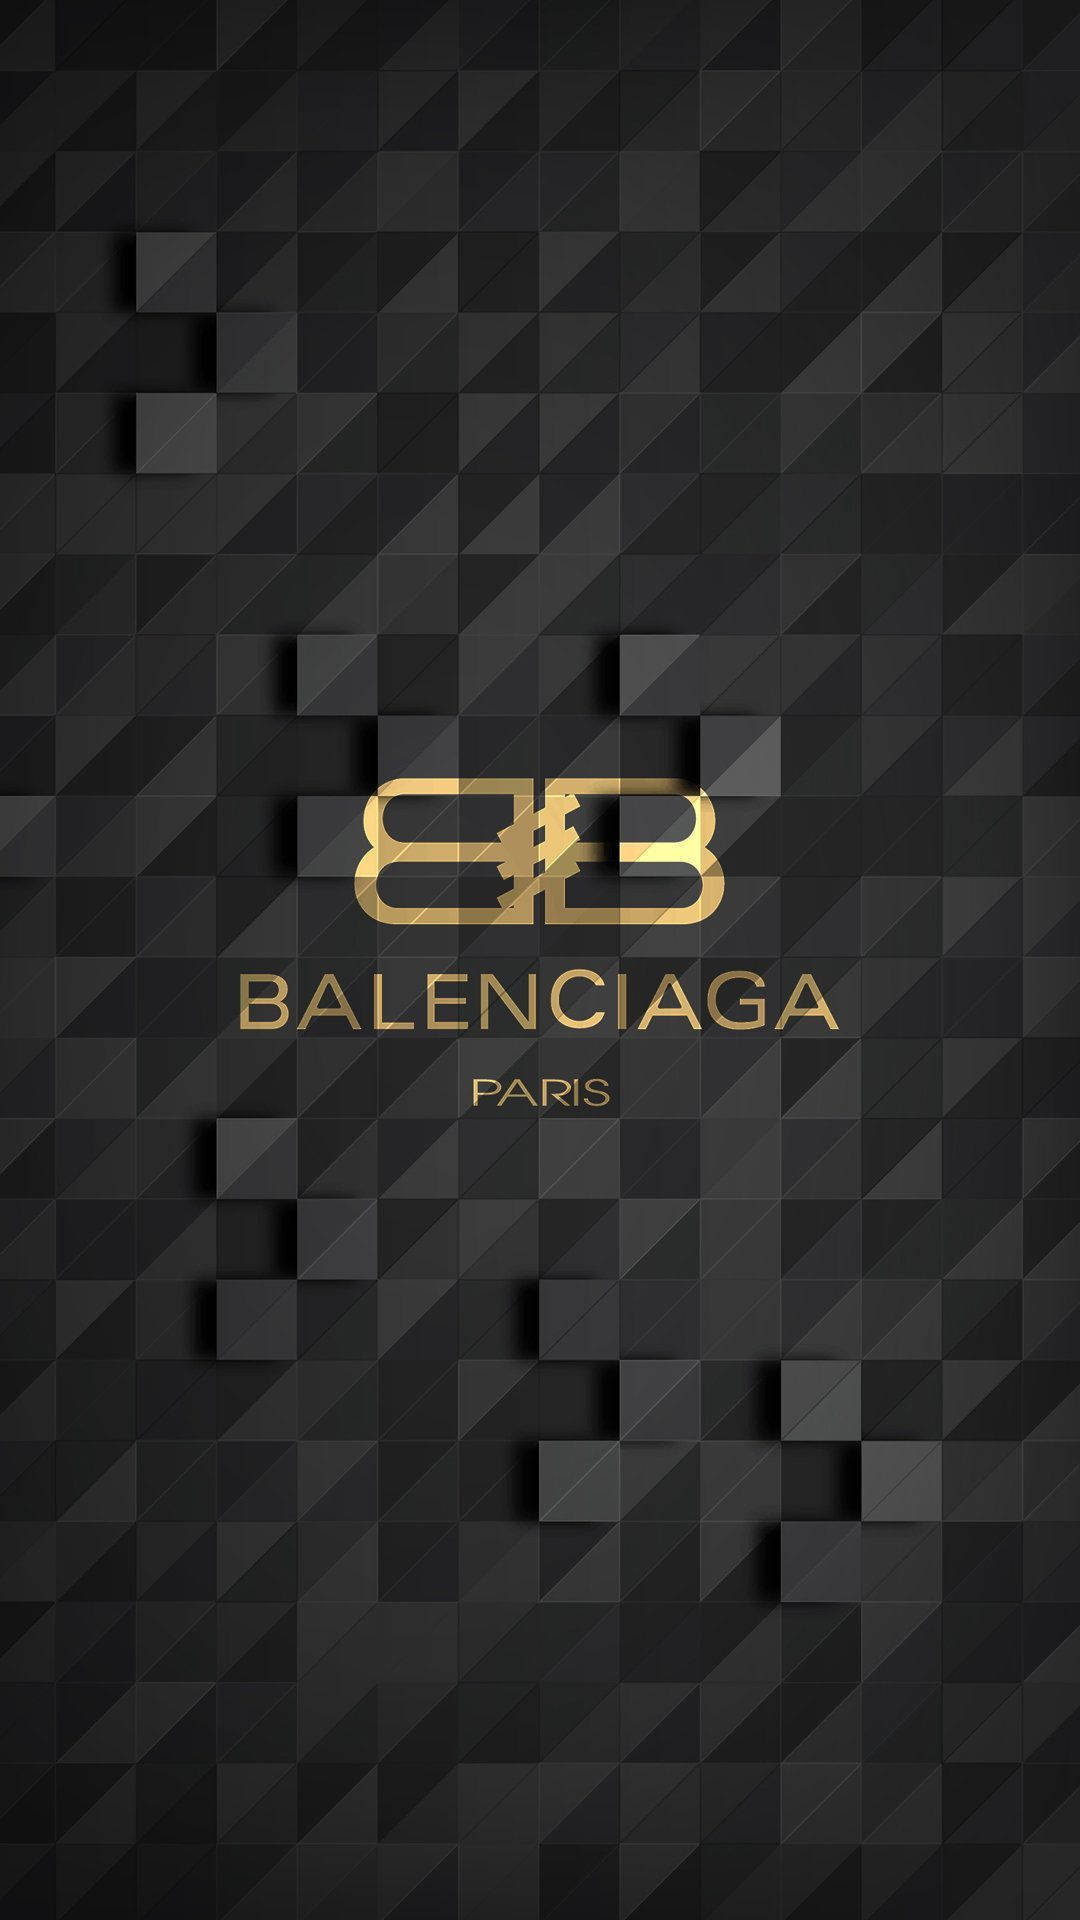 Balenciaga Paris Pixelated Wallpaper